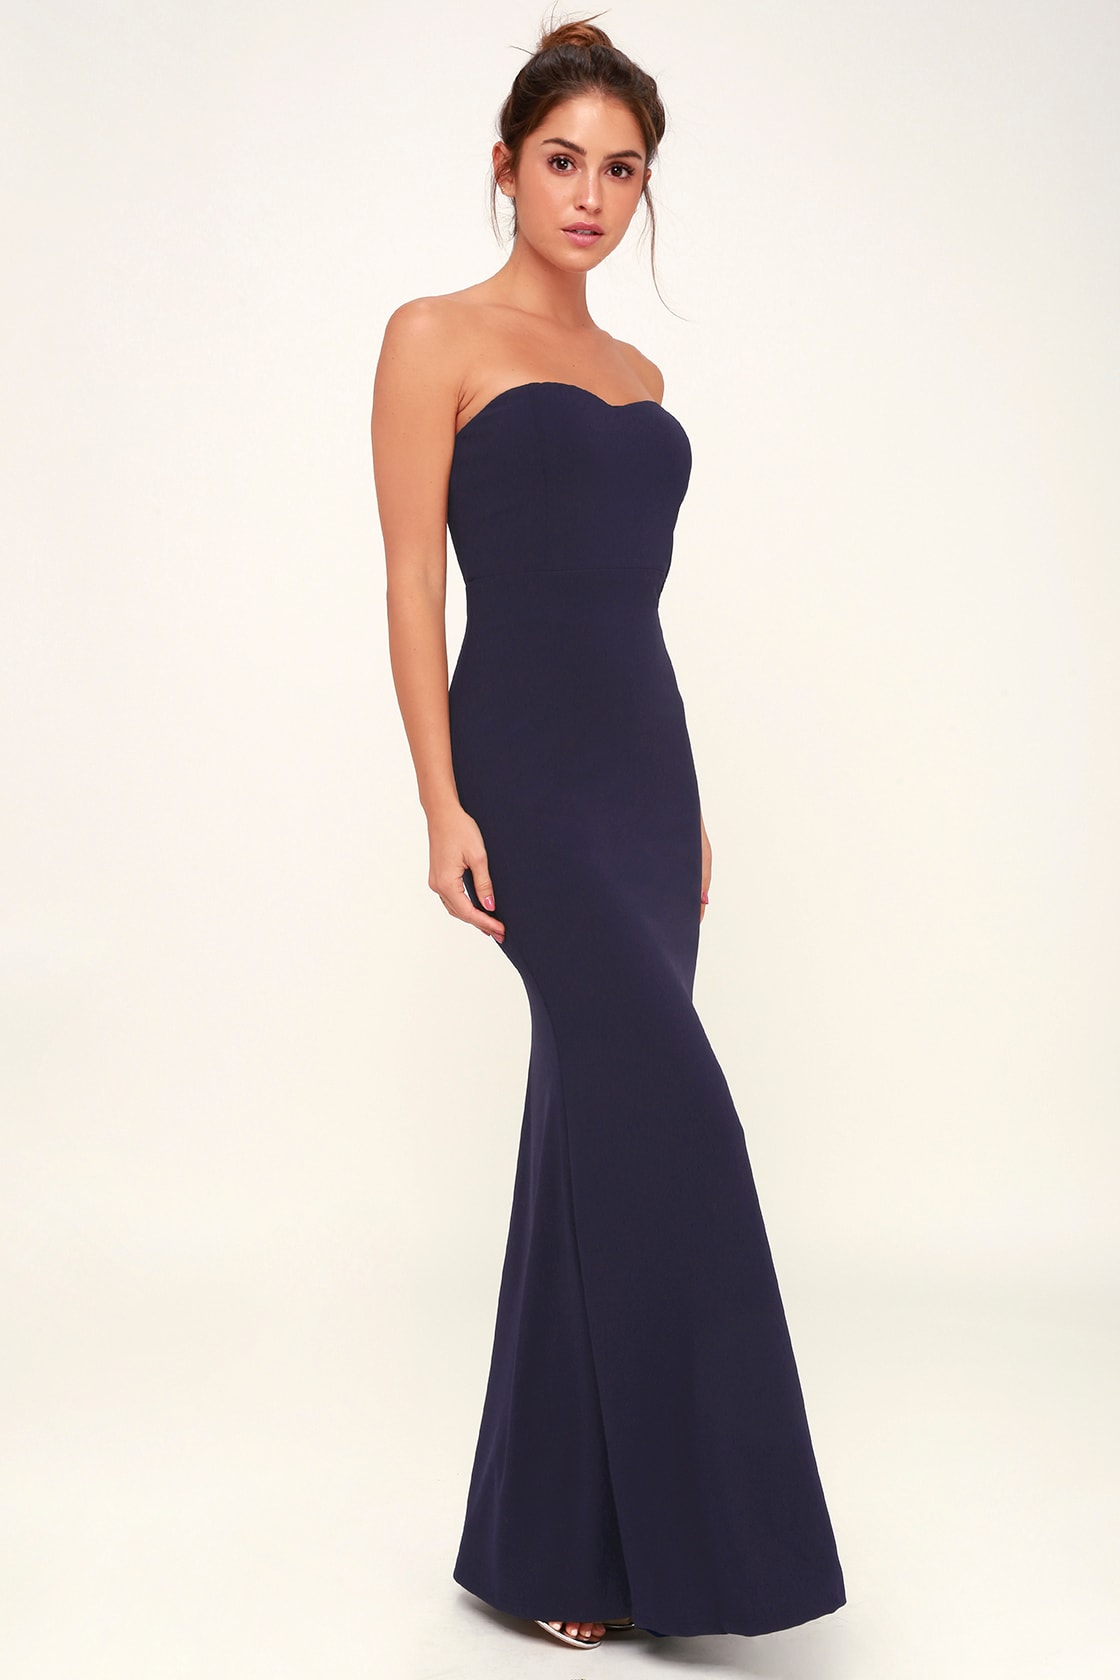 Stunning Navy Blue Dress - Strapless Dress - Mermaid Maxi Dress - Lulus